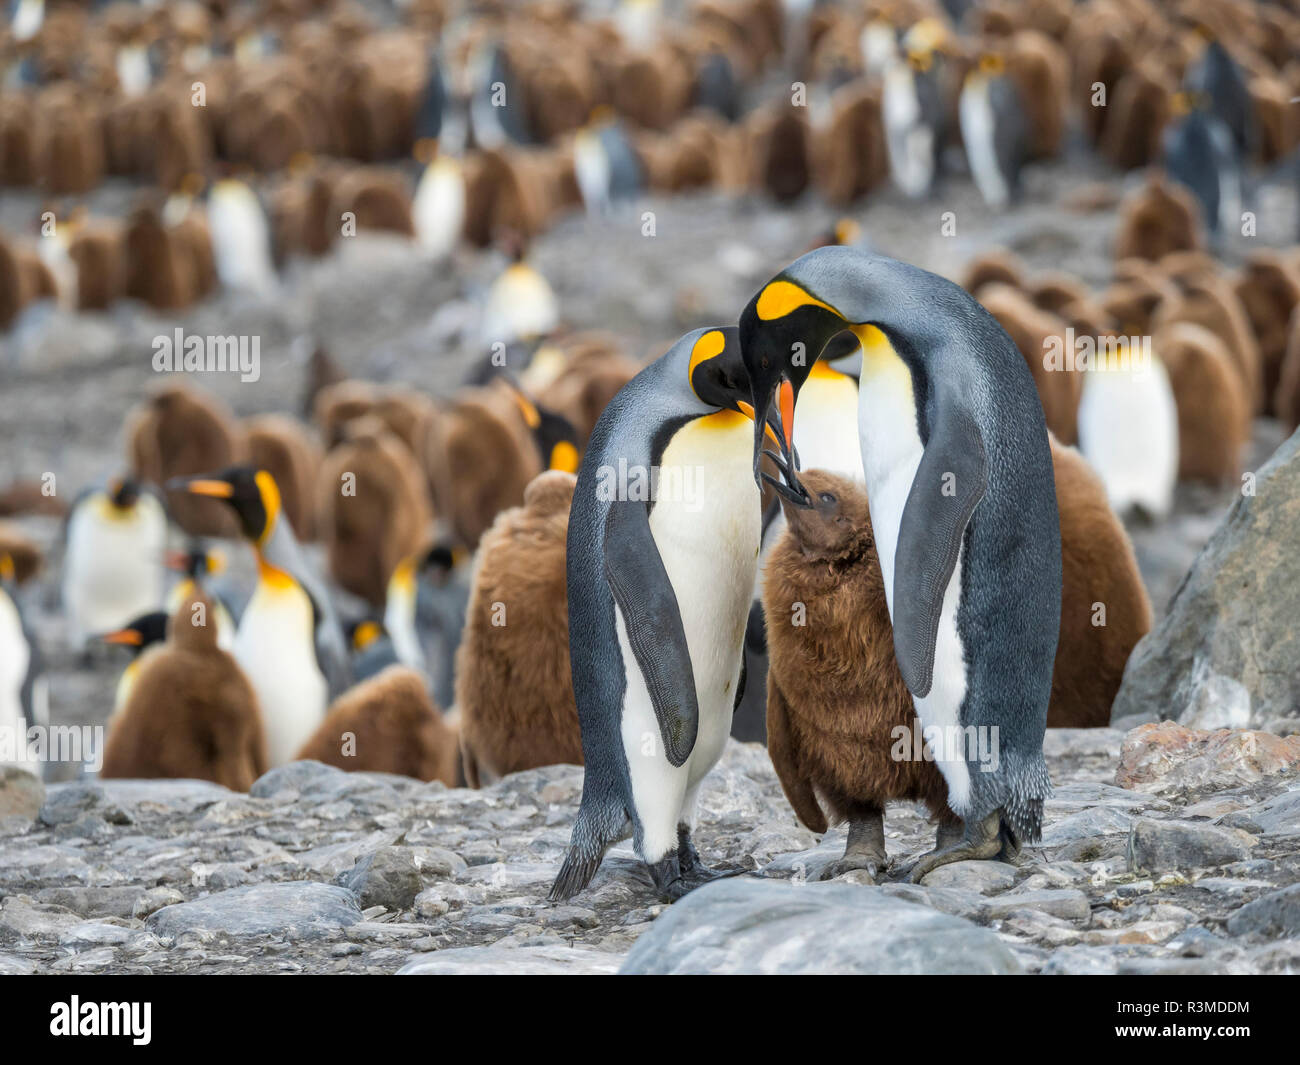 King Penguin (Aptenodytes patagonicus) rookery in St. Andrews Bay. Feeding behavior. South Georgia Island Stock Photo